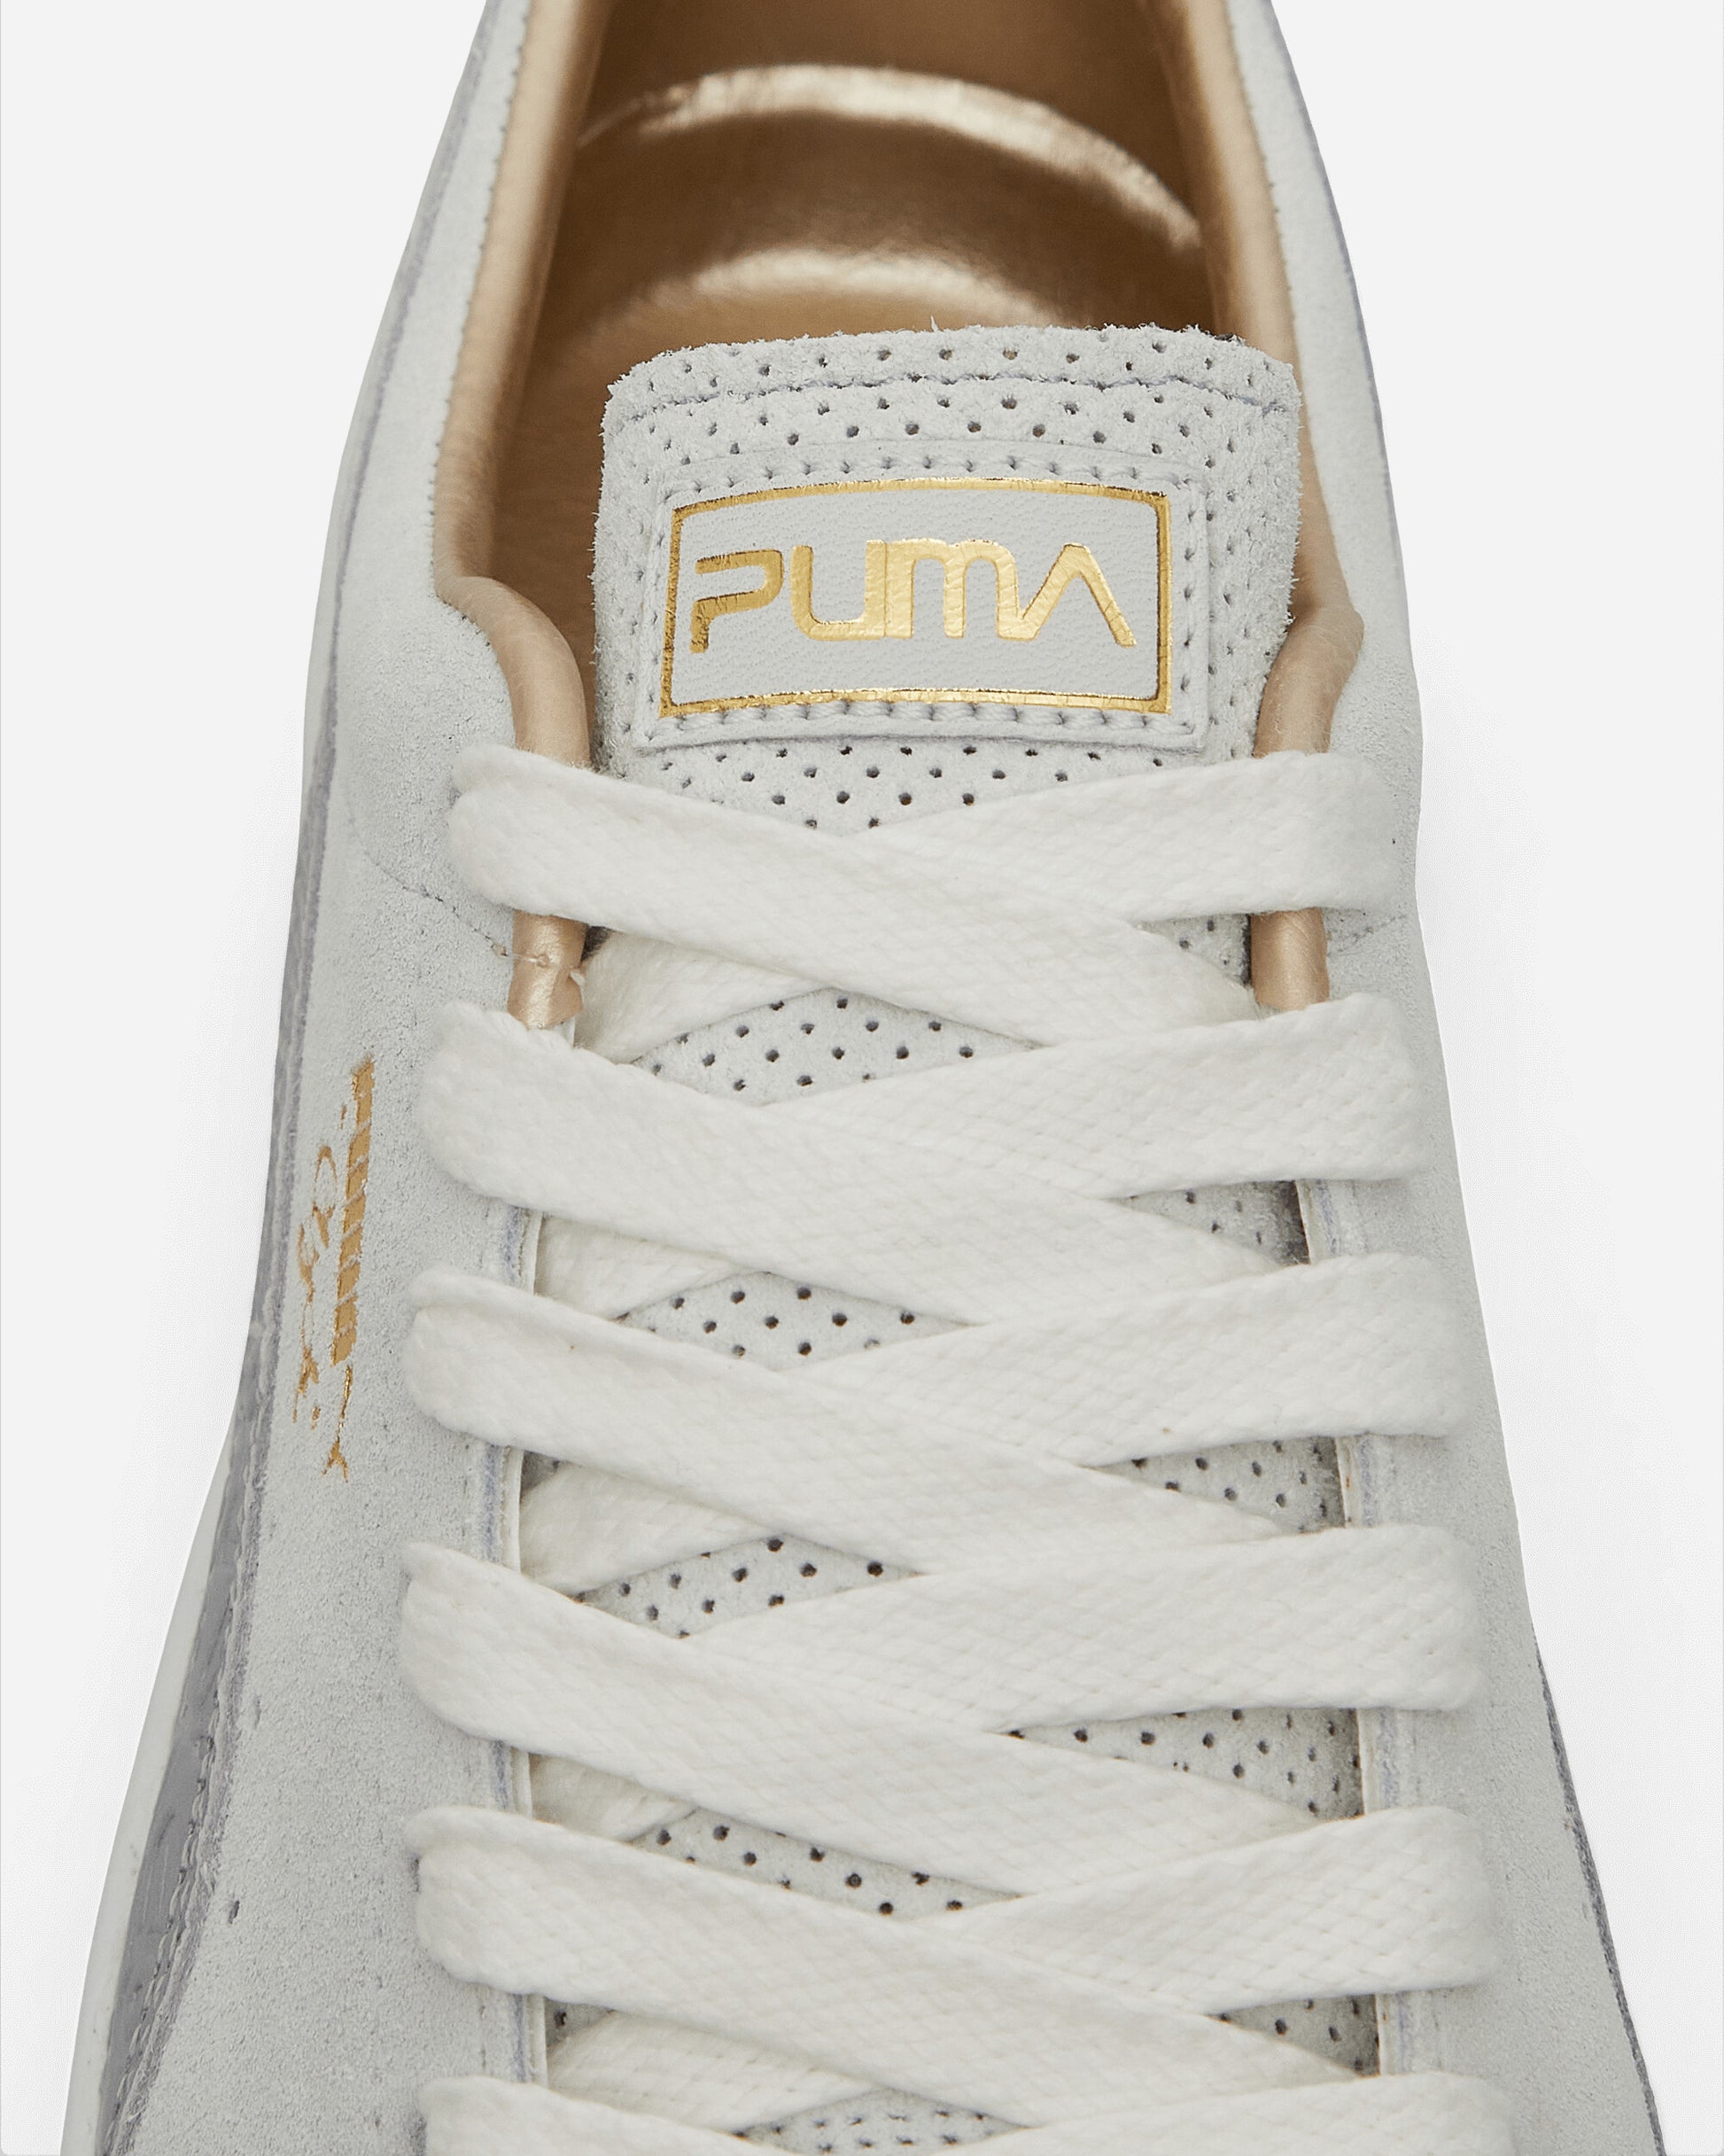 Puma Clyde Sorayama Mij Feather Gray-Puma Black Sneakers Low 394497-01